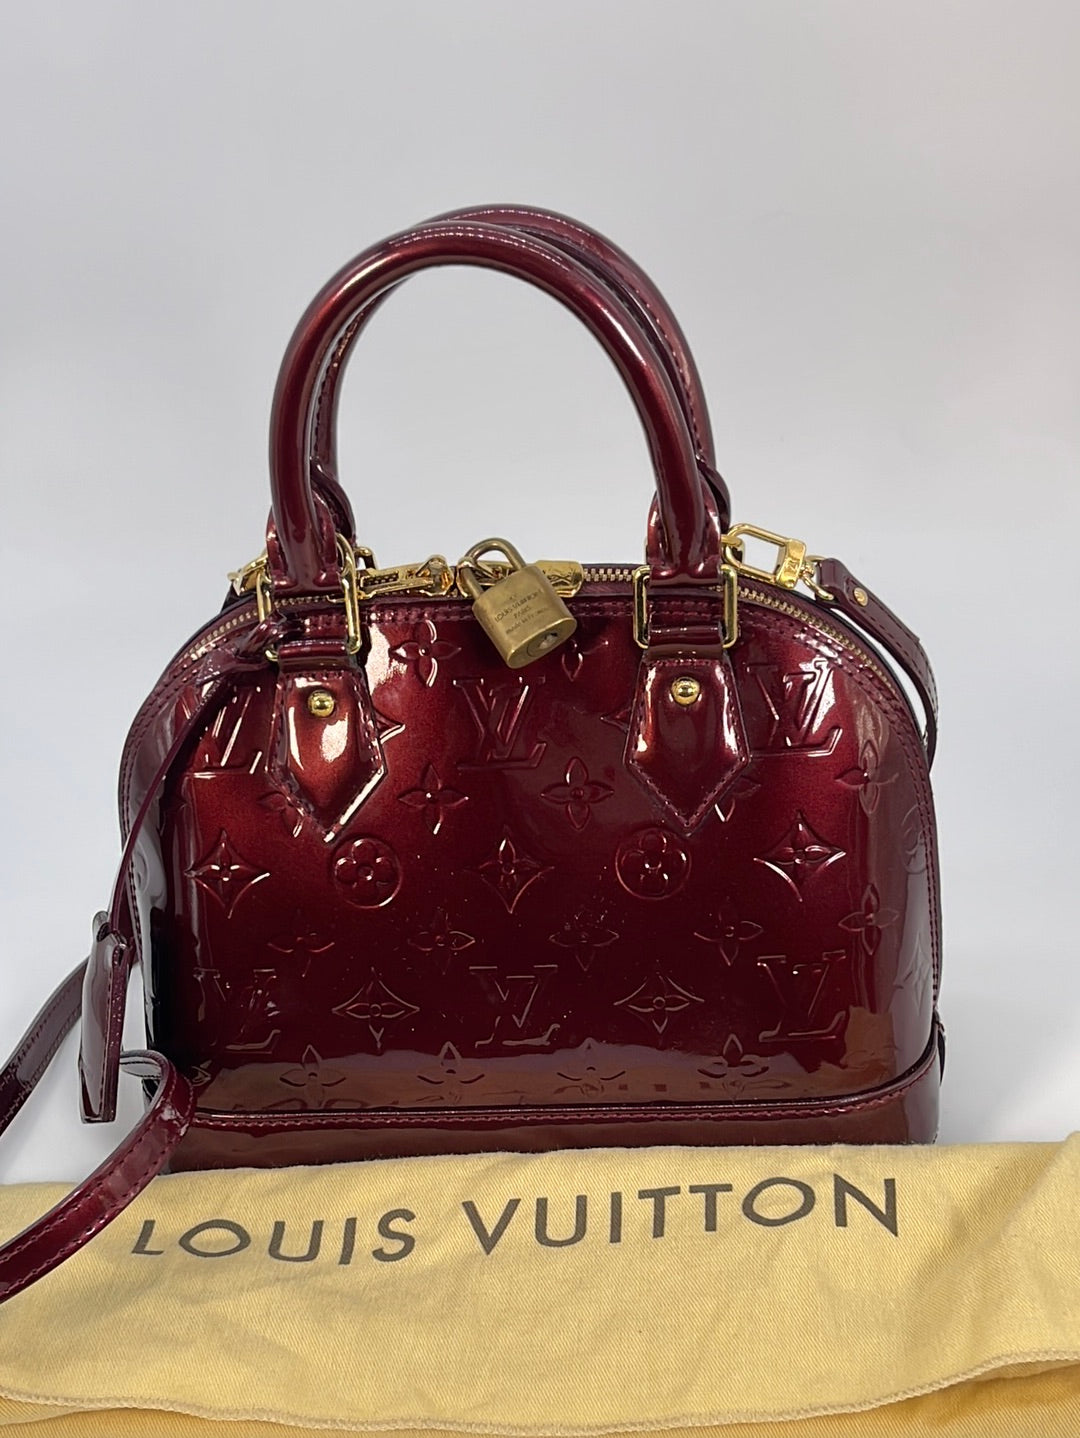 PRELOVED Louis Vuitton Yellow Vernis Alma BB Bag AA0194 041023